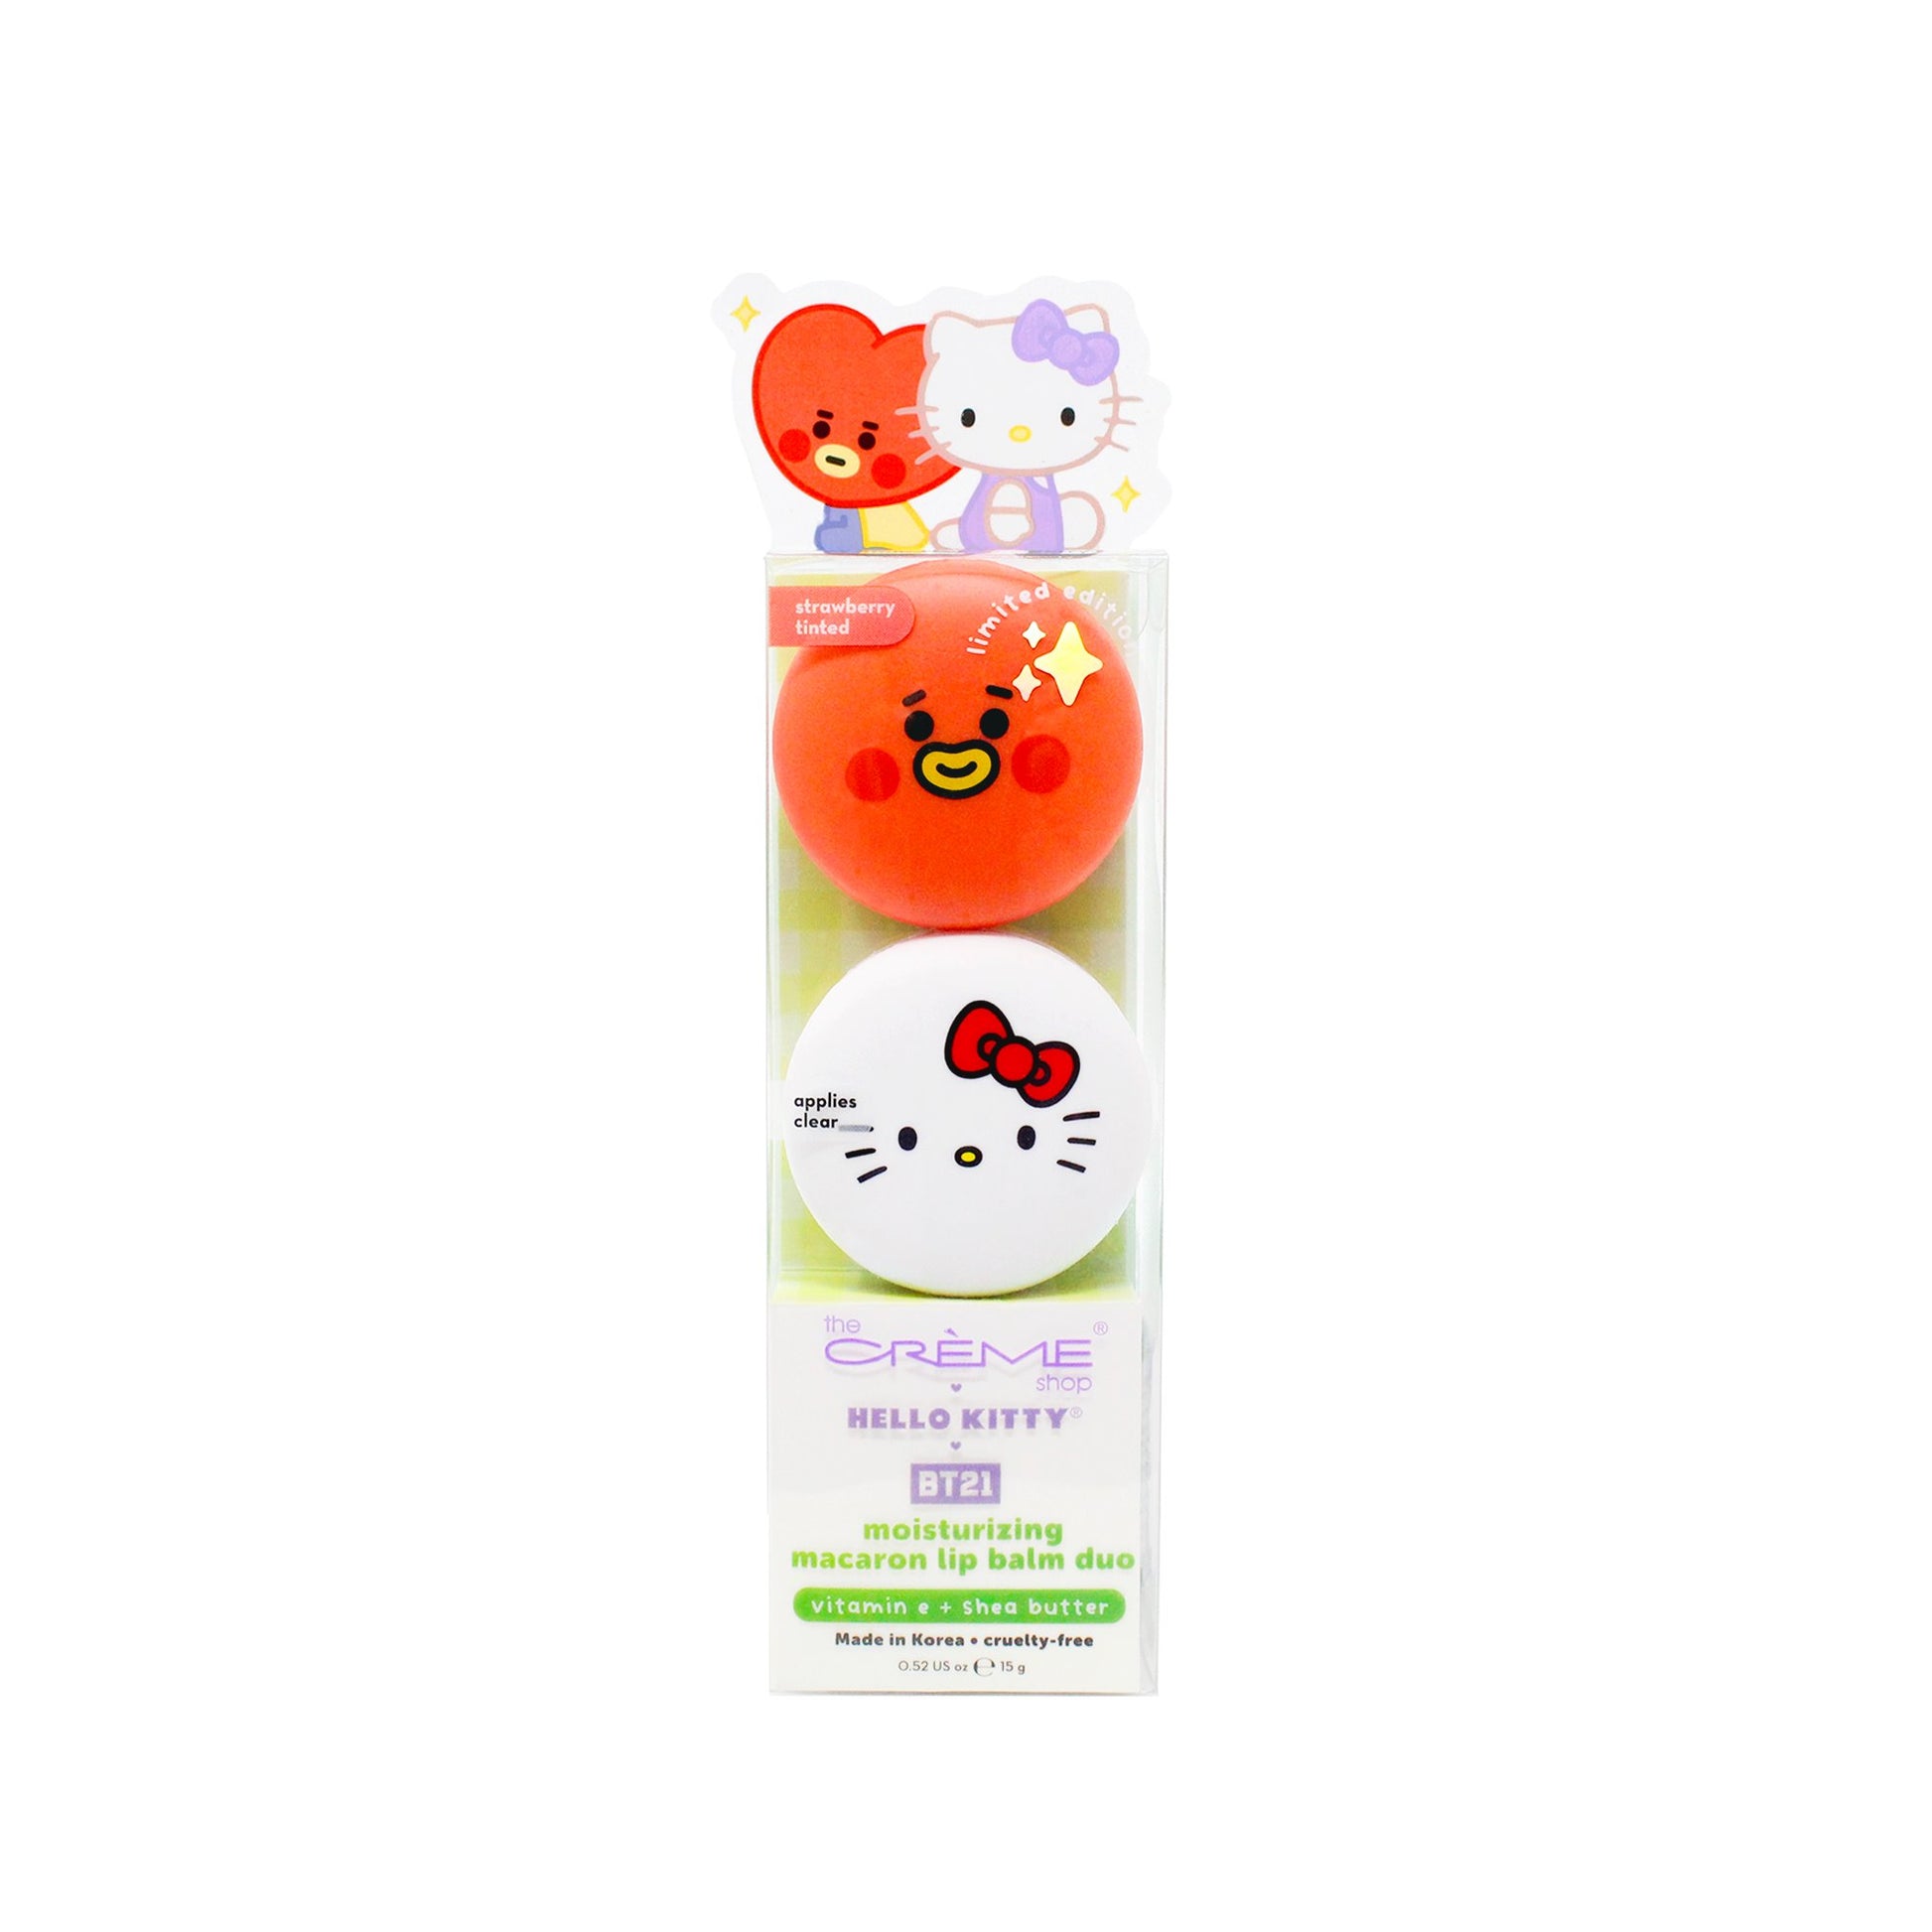 Hello Kitty & BT21 TATA Moisturizing Macaron Lip Balm Duo, $18